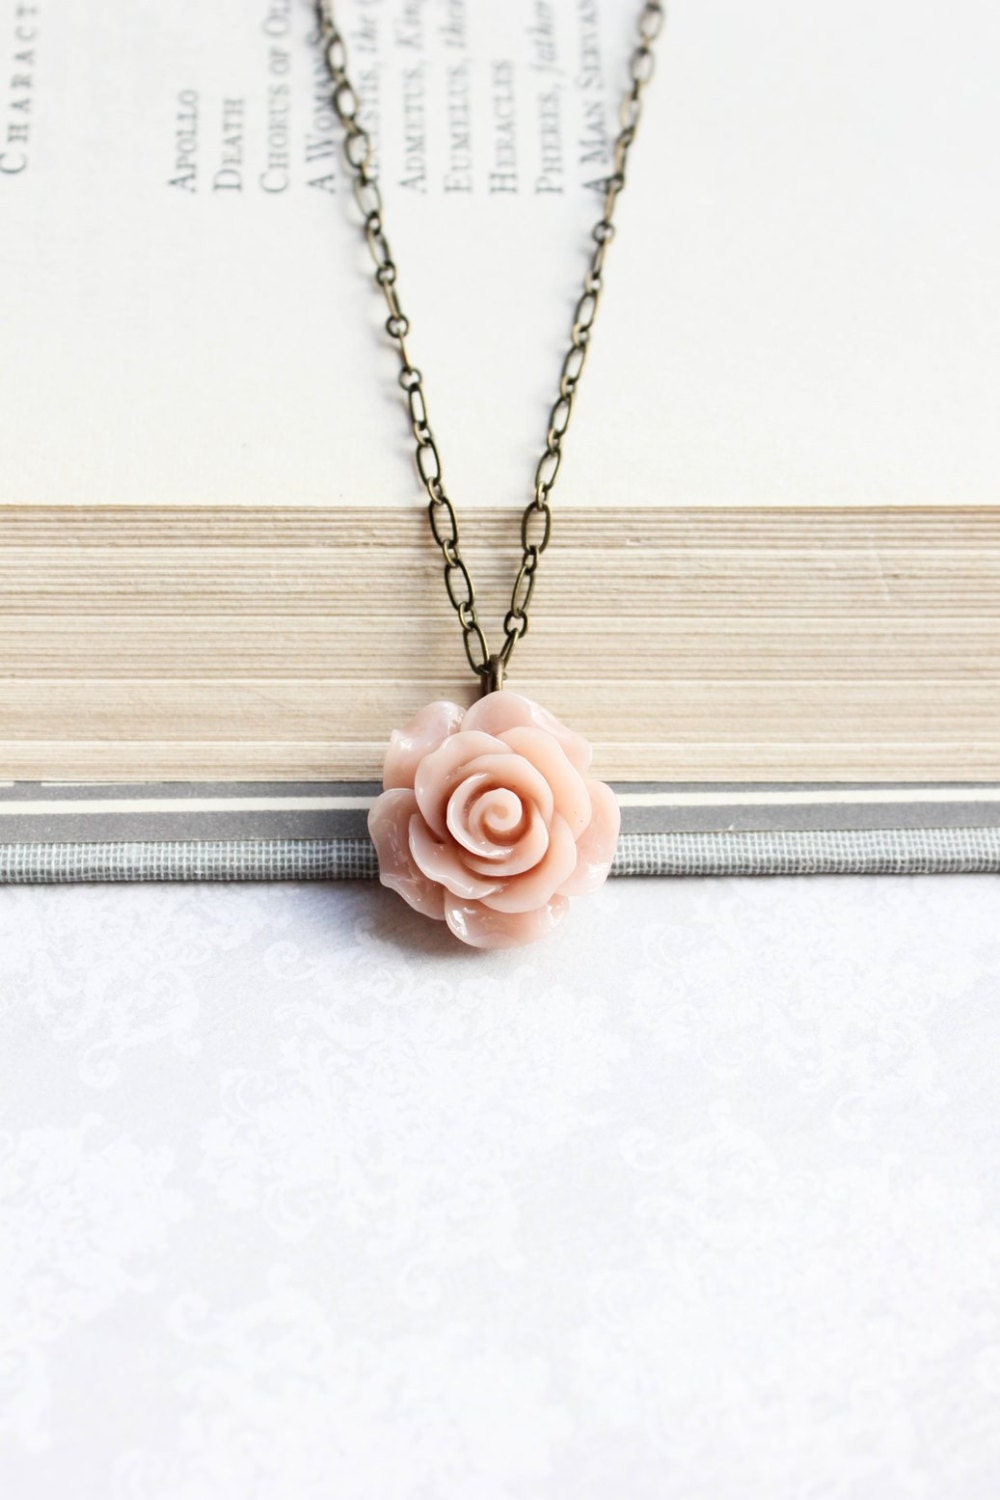 Blush Rose Necklace Romantic Vintage Inspired Spring Wedding - Etsy